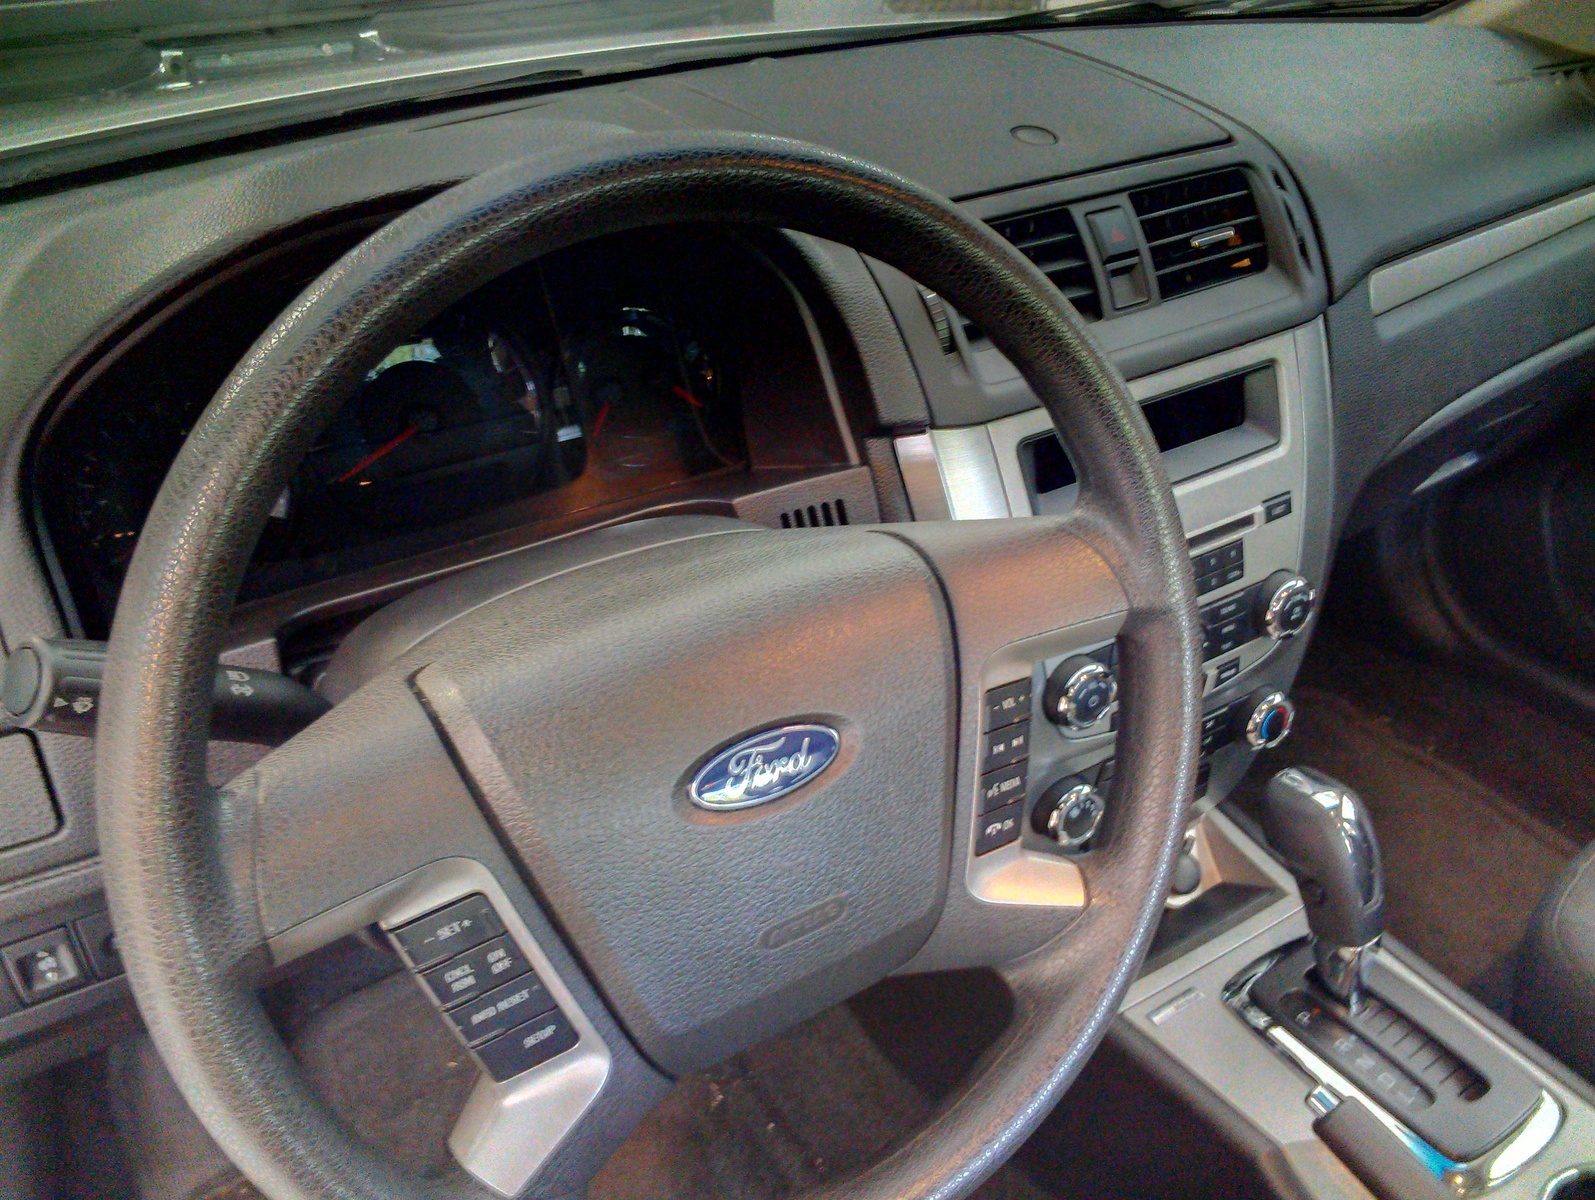 2011 Ford fusion crash tests #2